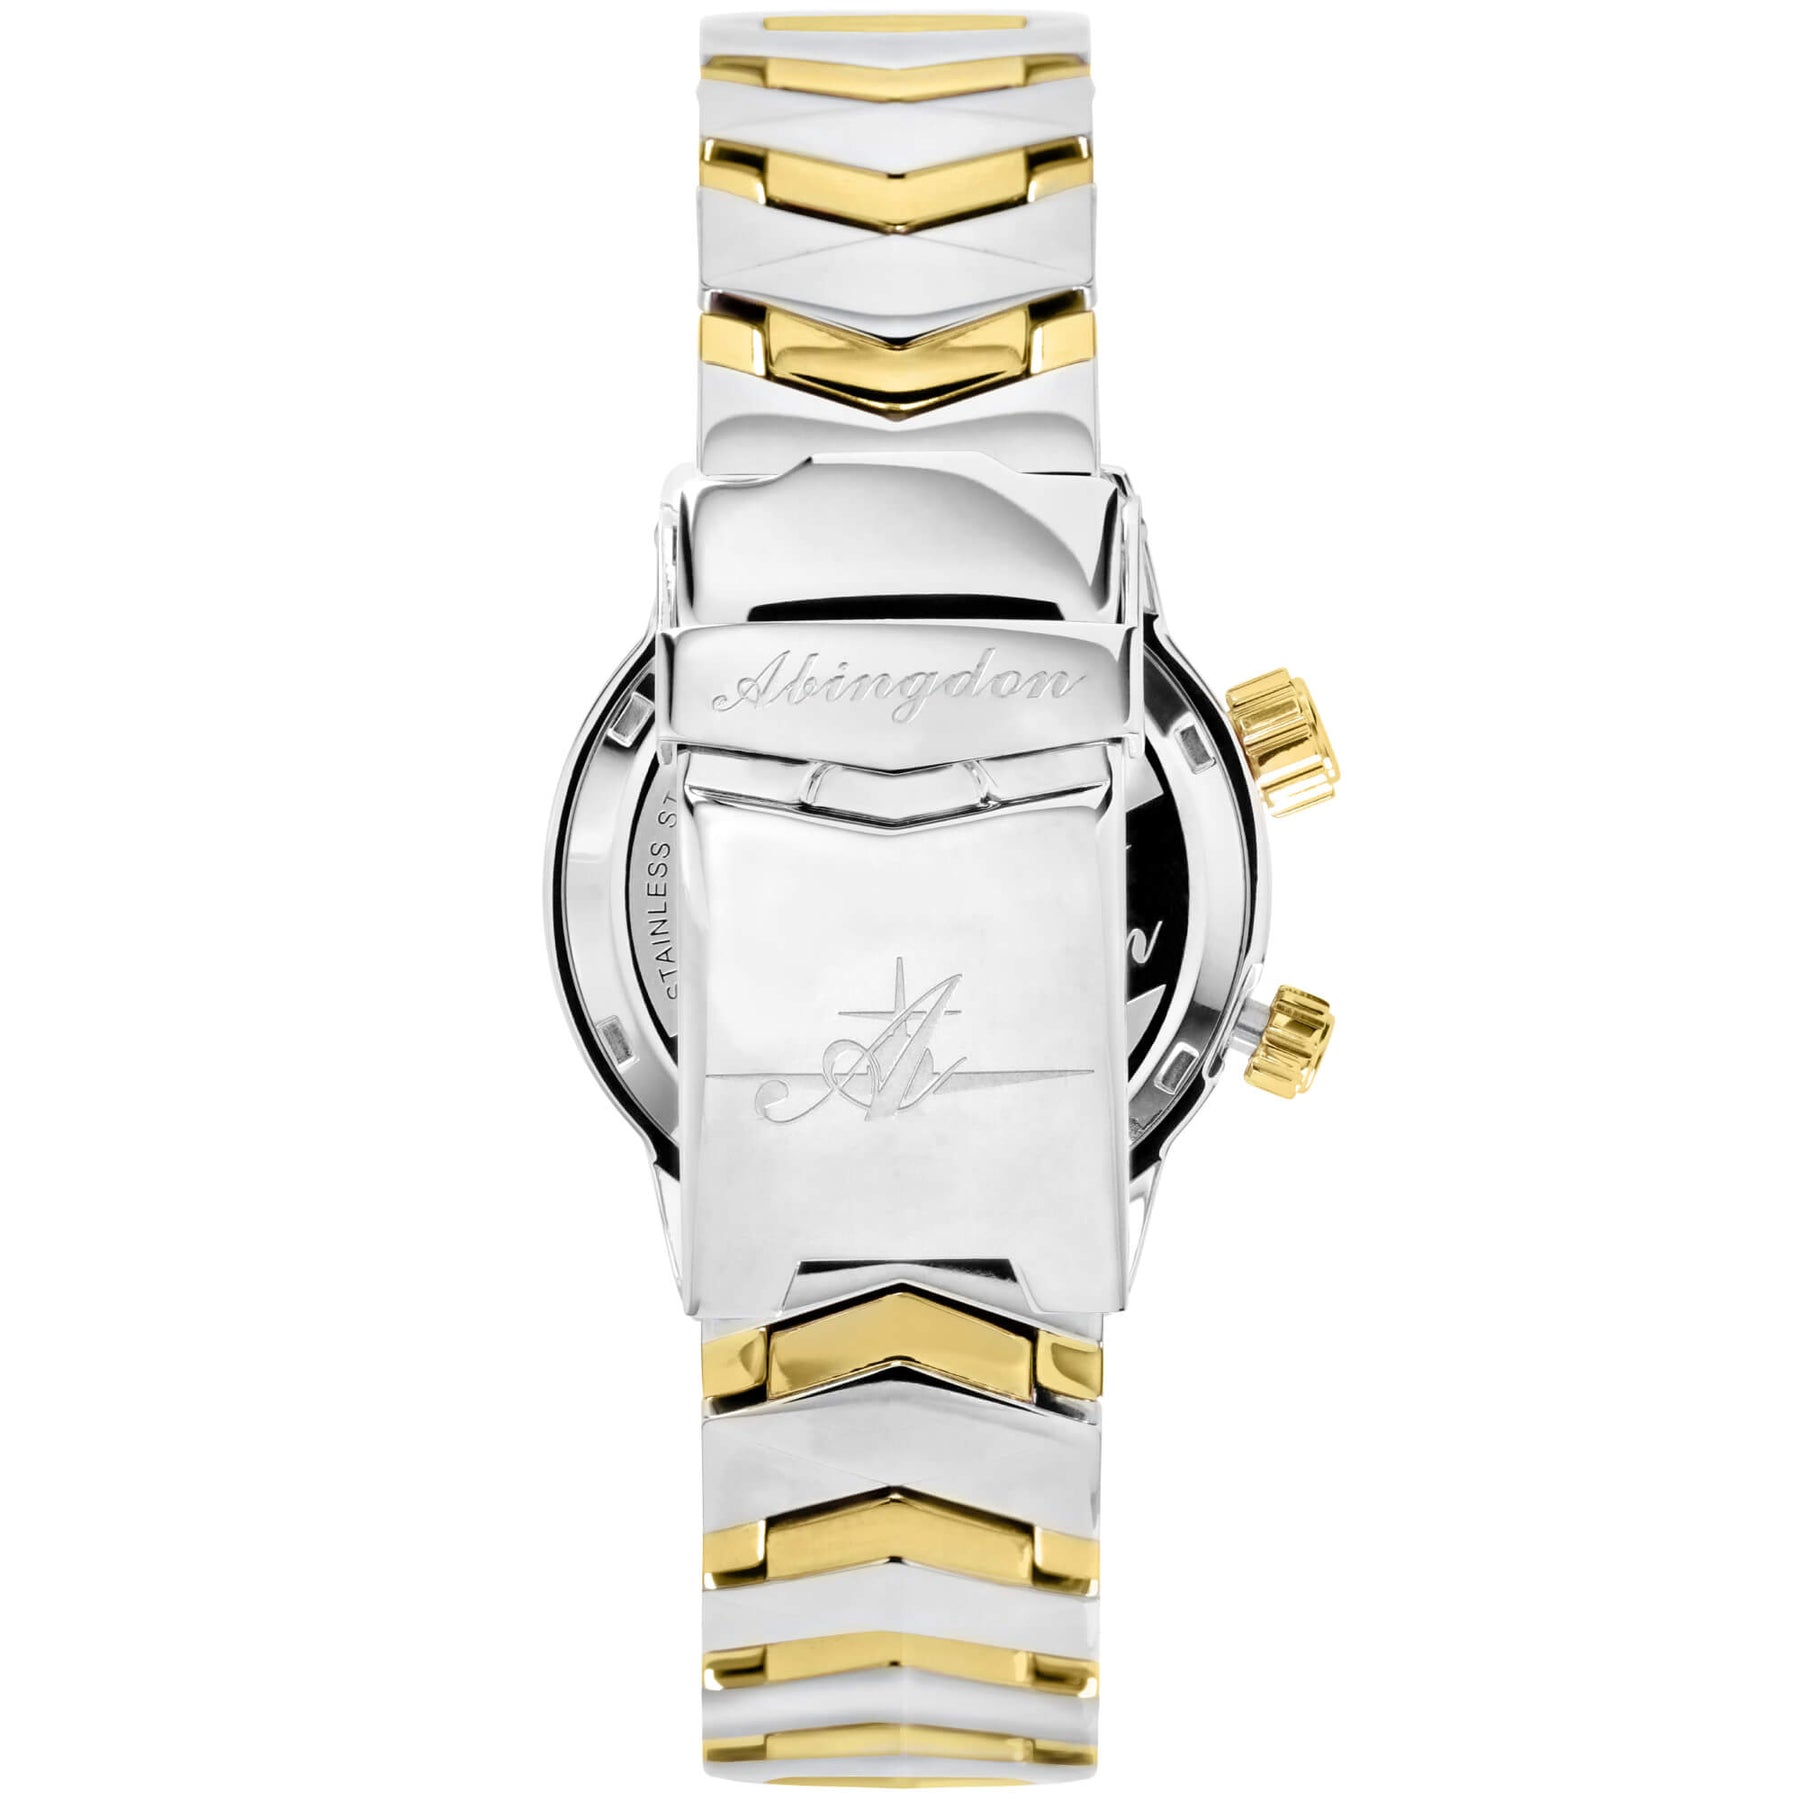 Voyager GMT watch in pink gold, Louis Vuitton